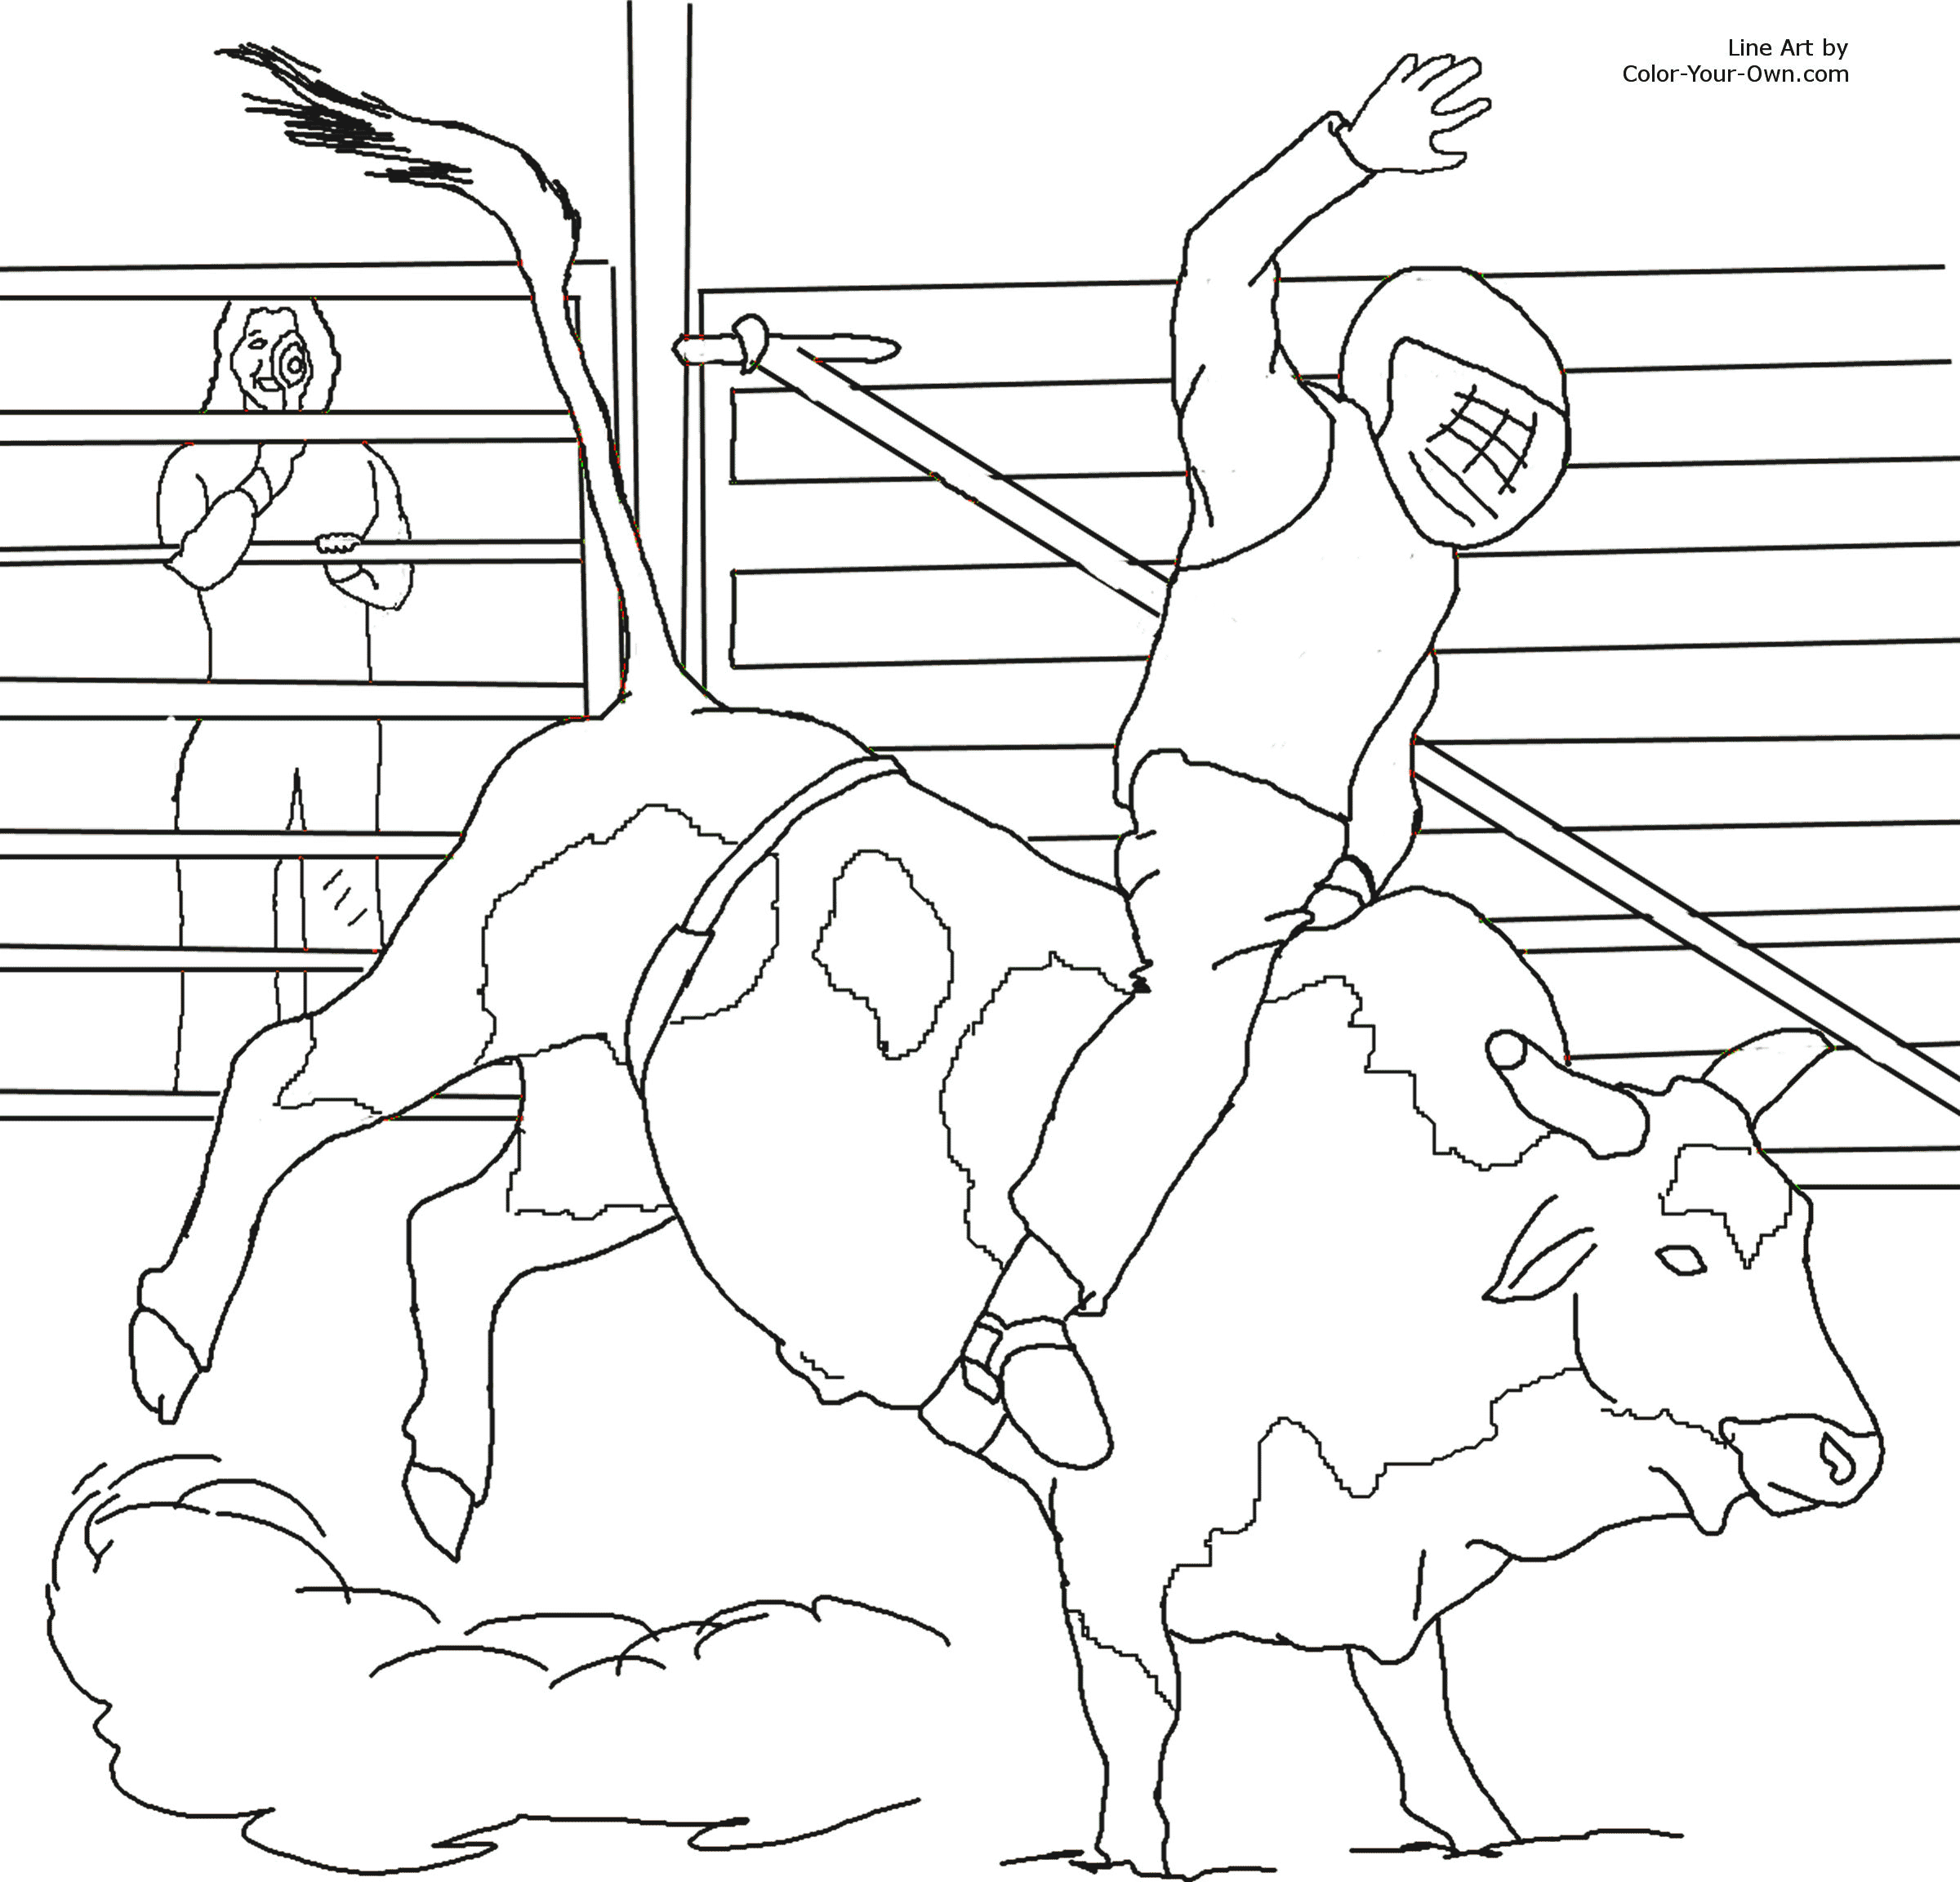 11 Pics of Cowboy Bull Riding Coloring Page - Bull Riding Coloring ...